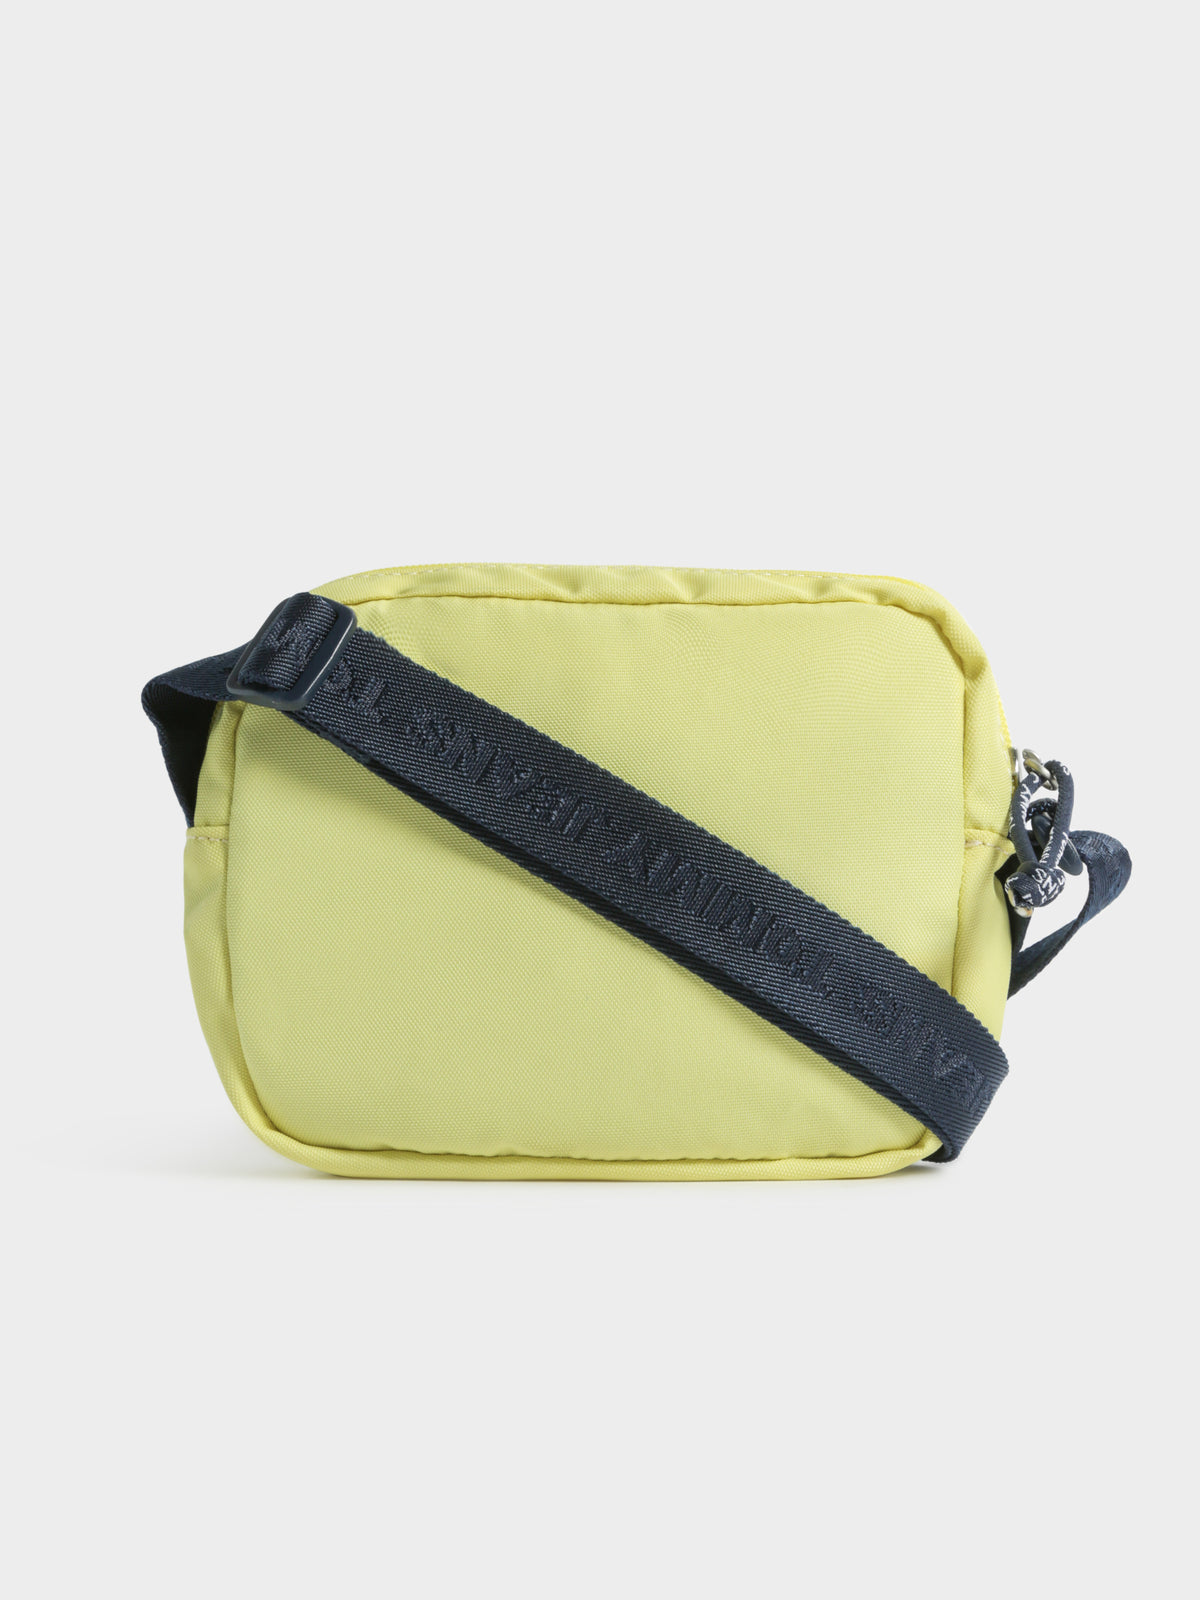 Campus Crossover Bag in Lemon